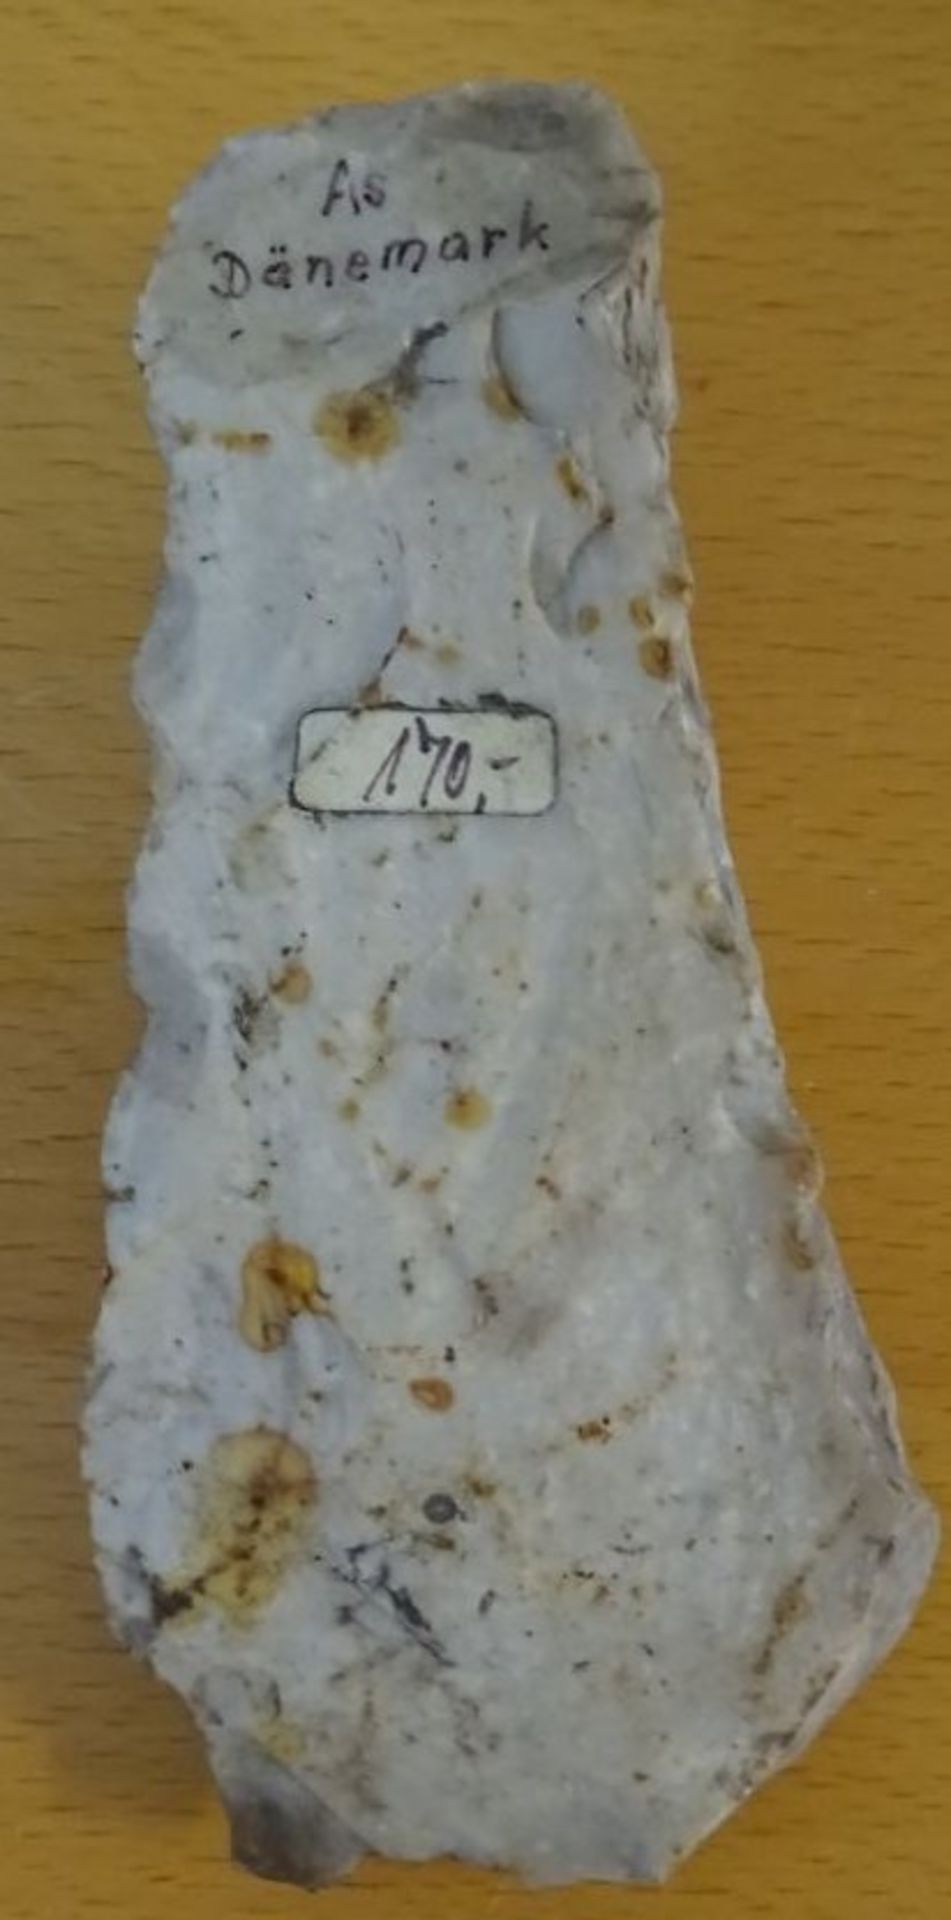 Faustkeil, Mineral-Quartz?, Fundort Dänemark, 15x6 cm - Bild 3 aus 4